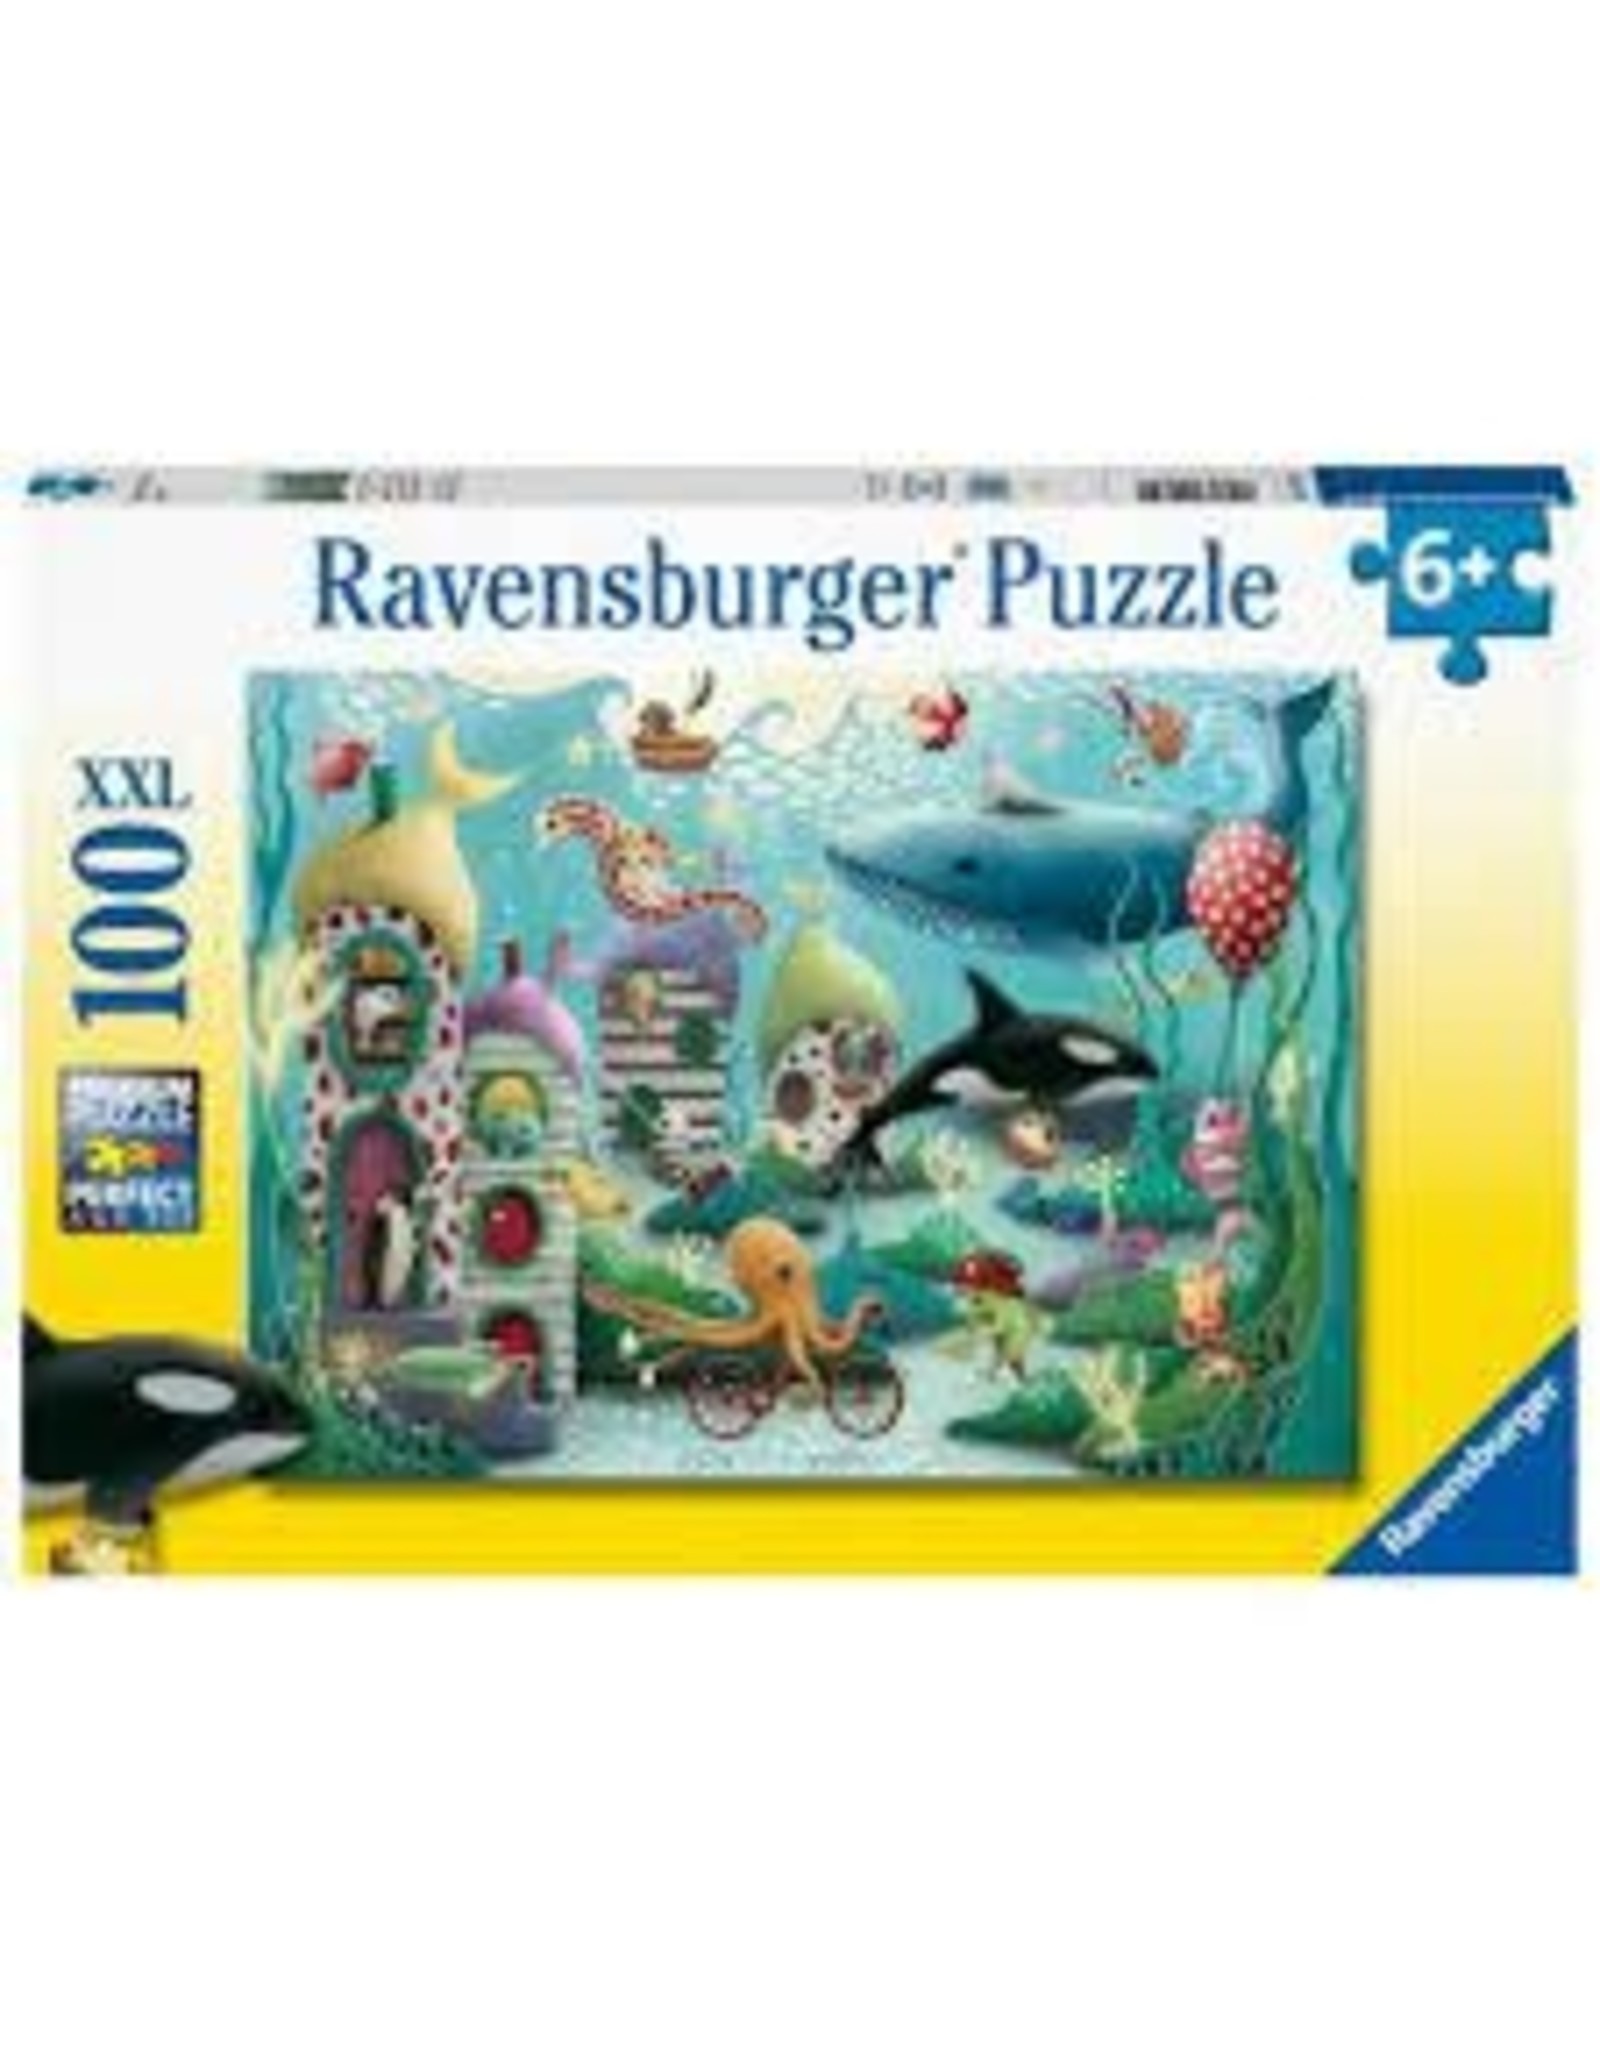 Ravensburger Puzzle Ravensburger 100 pcs Underwater wonders